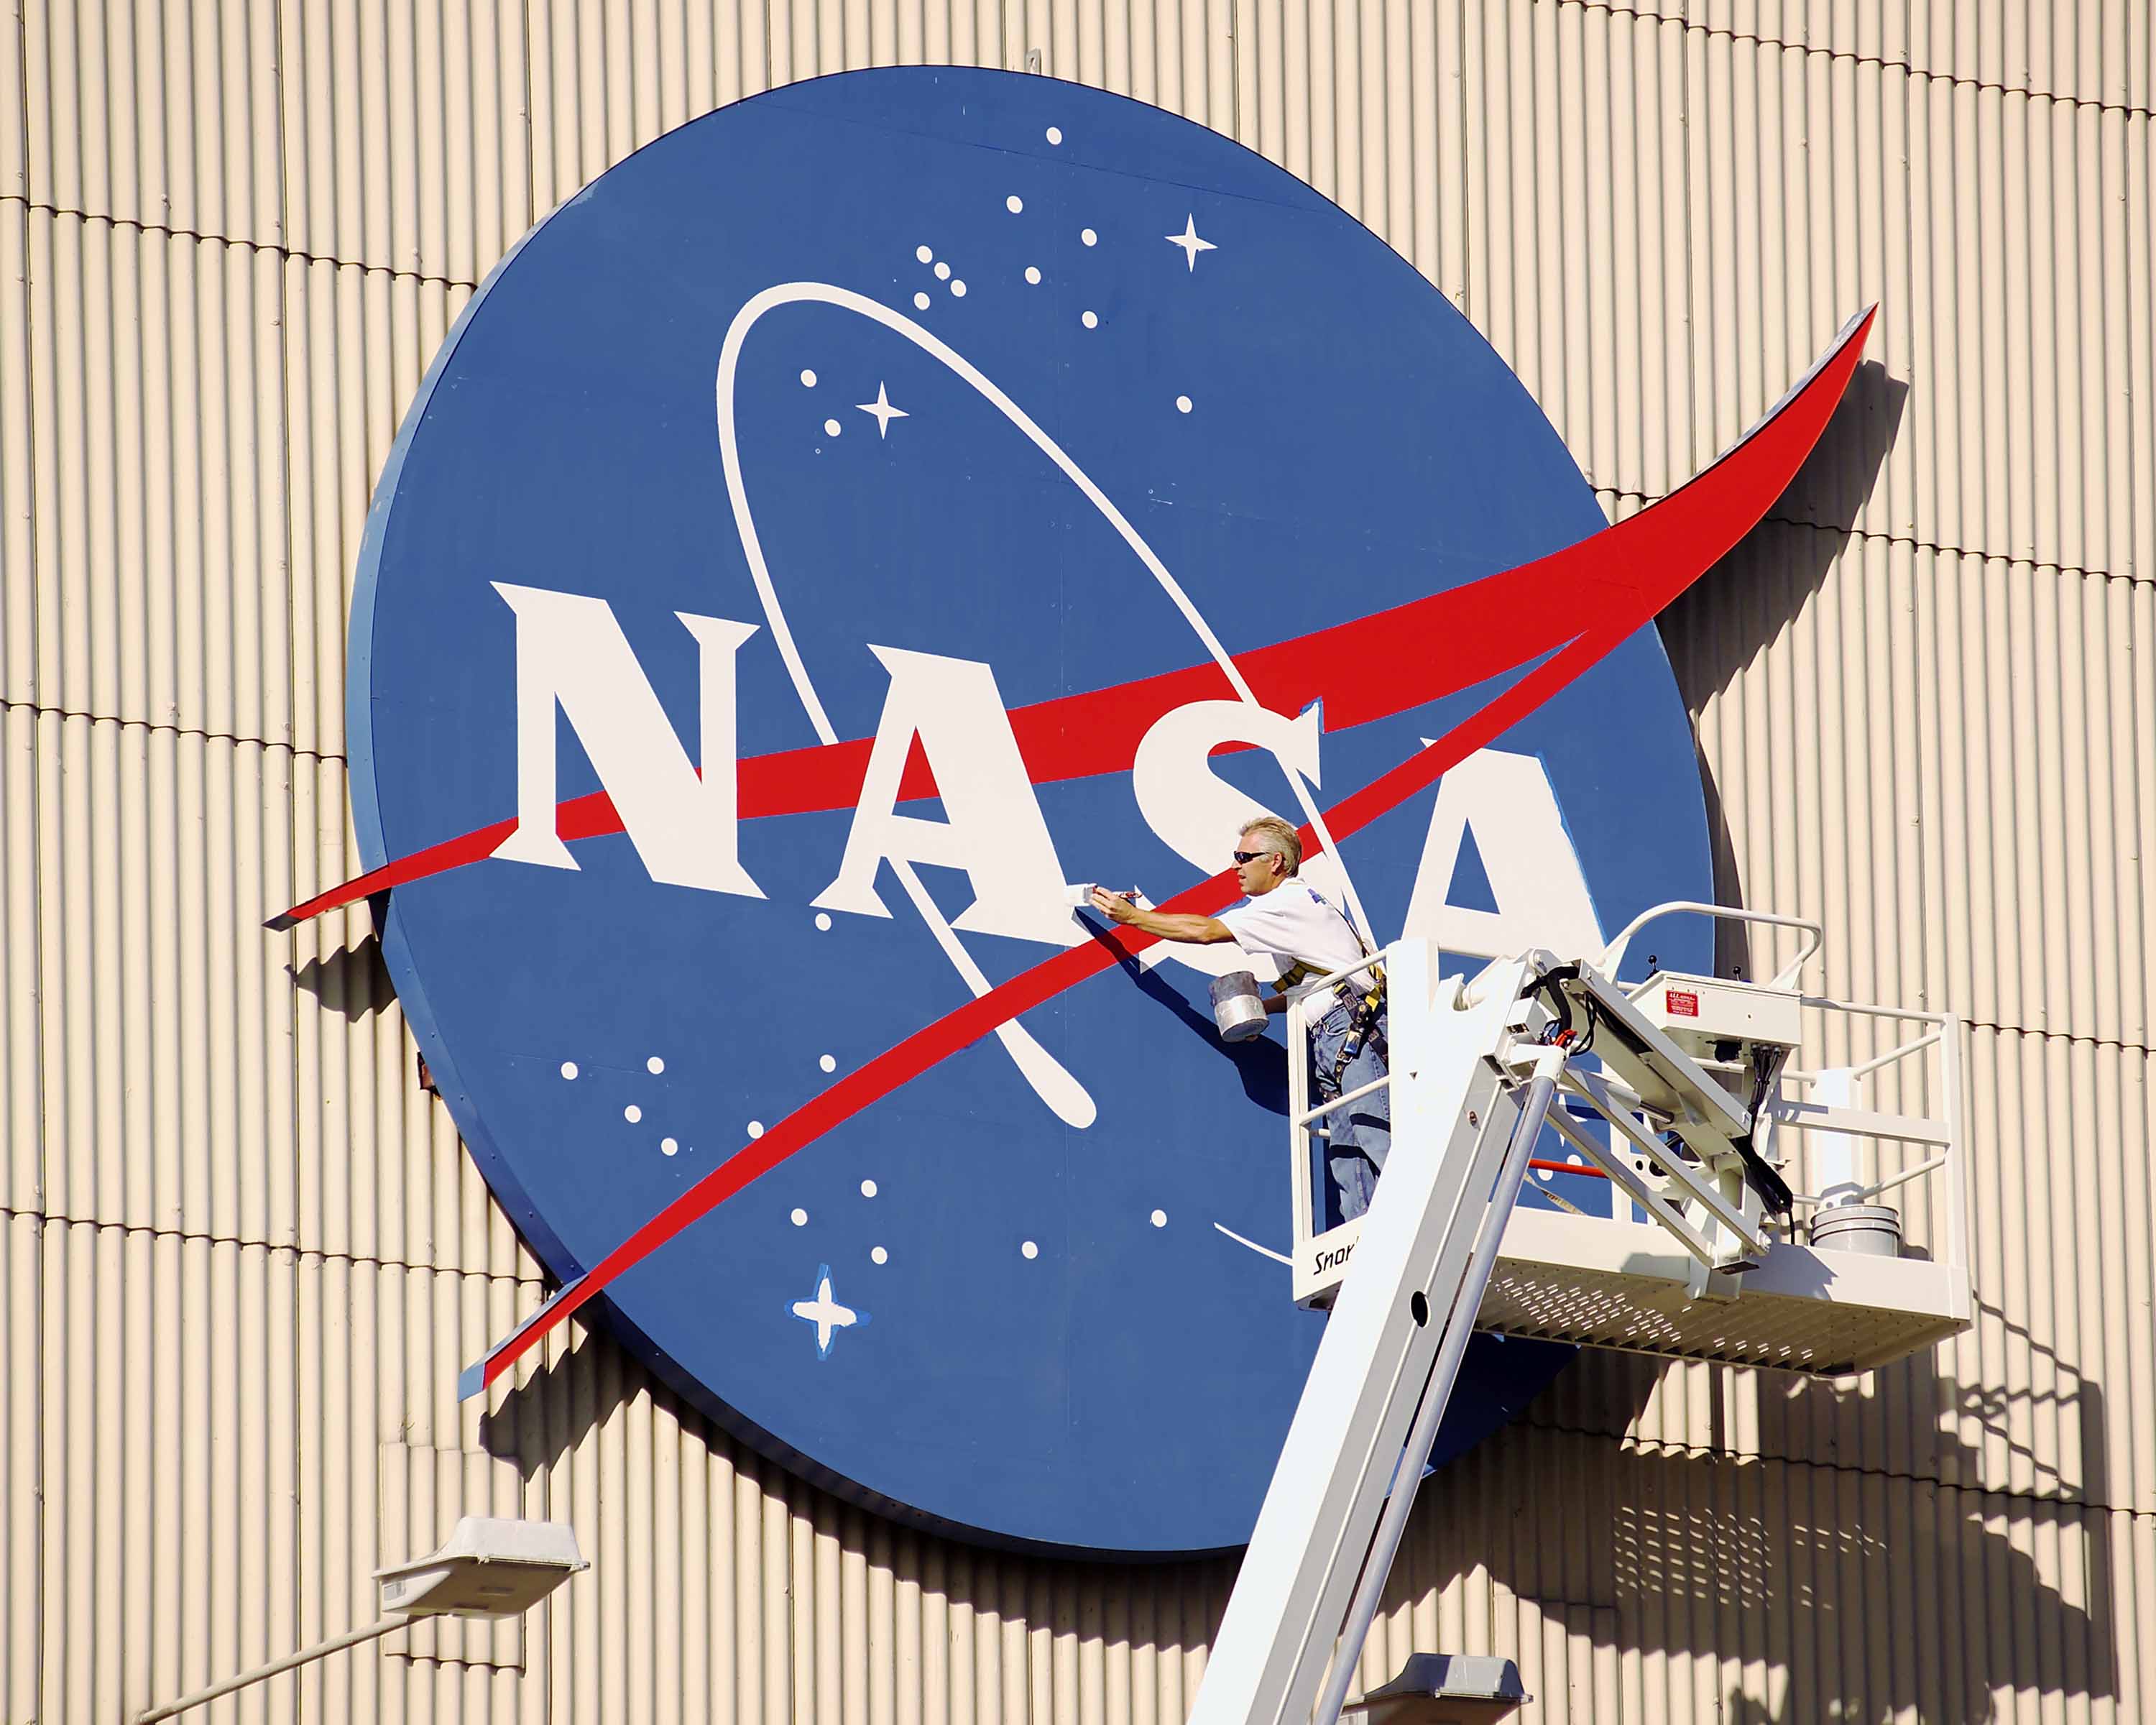 Symbols of NASA